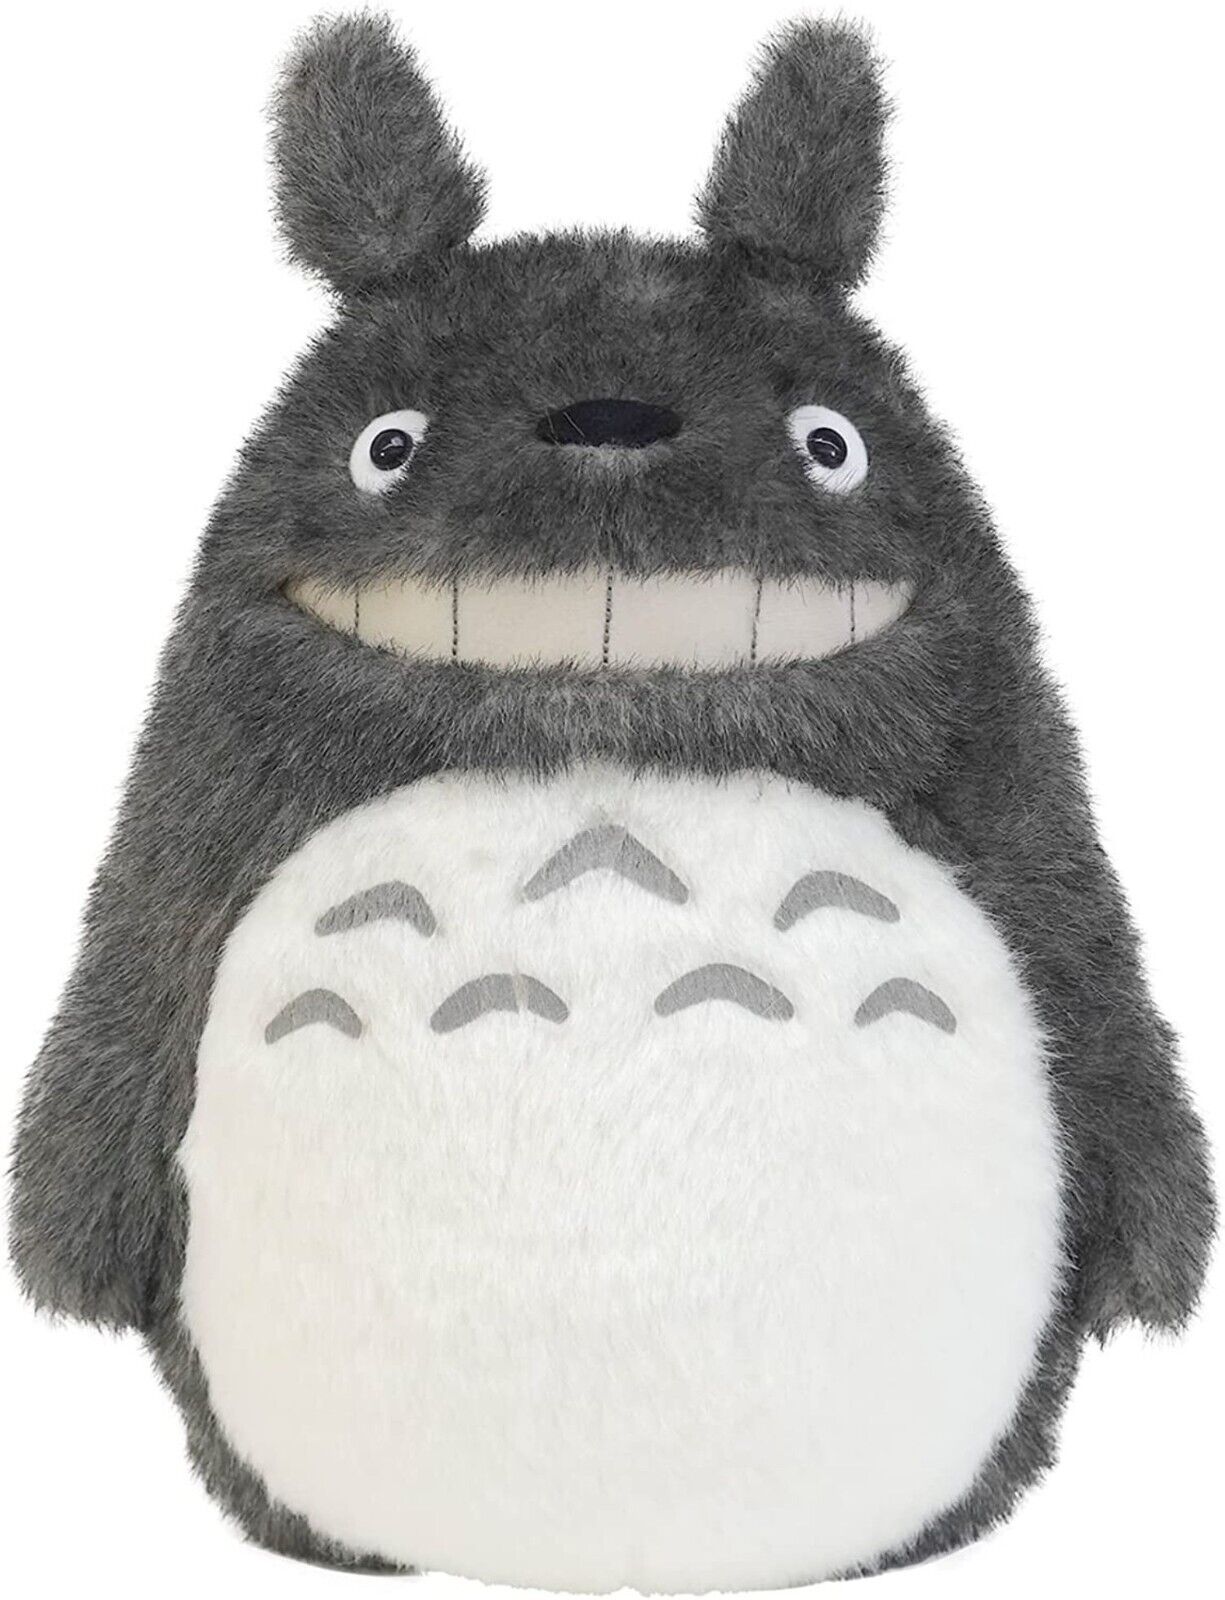 My Neighbor Totoro Stuffed Toy Big Totoro L (Laughter) Plush Doll Studio Ghibli